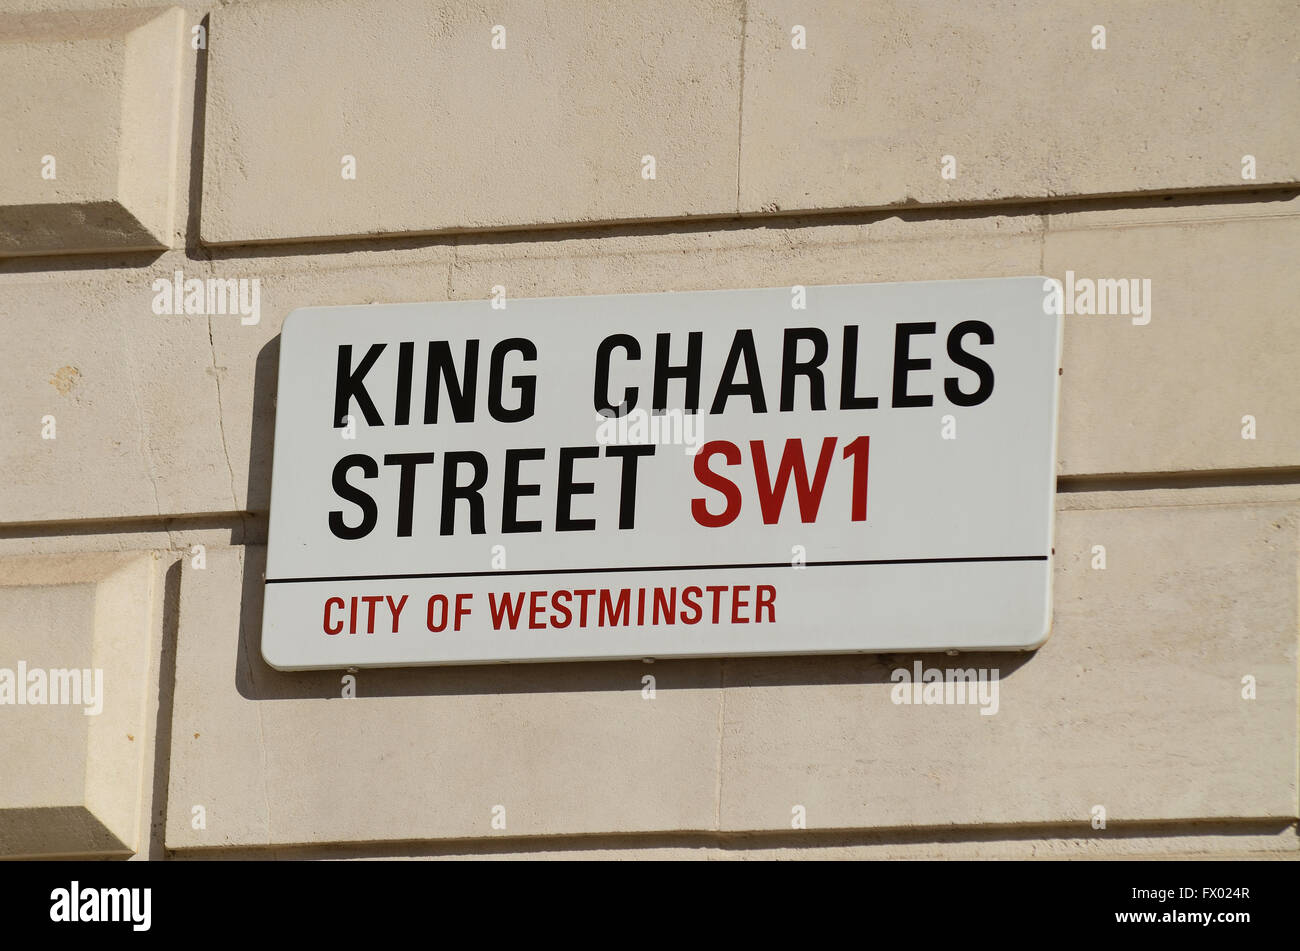 King Charles Street, Westminster, London, UK street sign Stockfoto